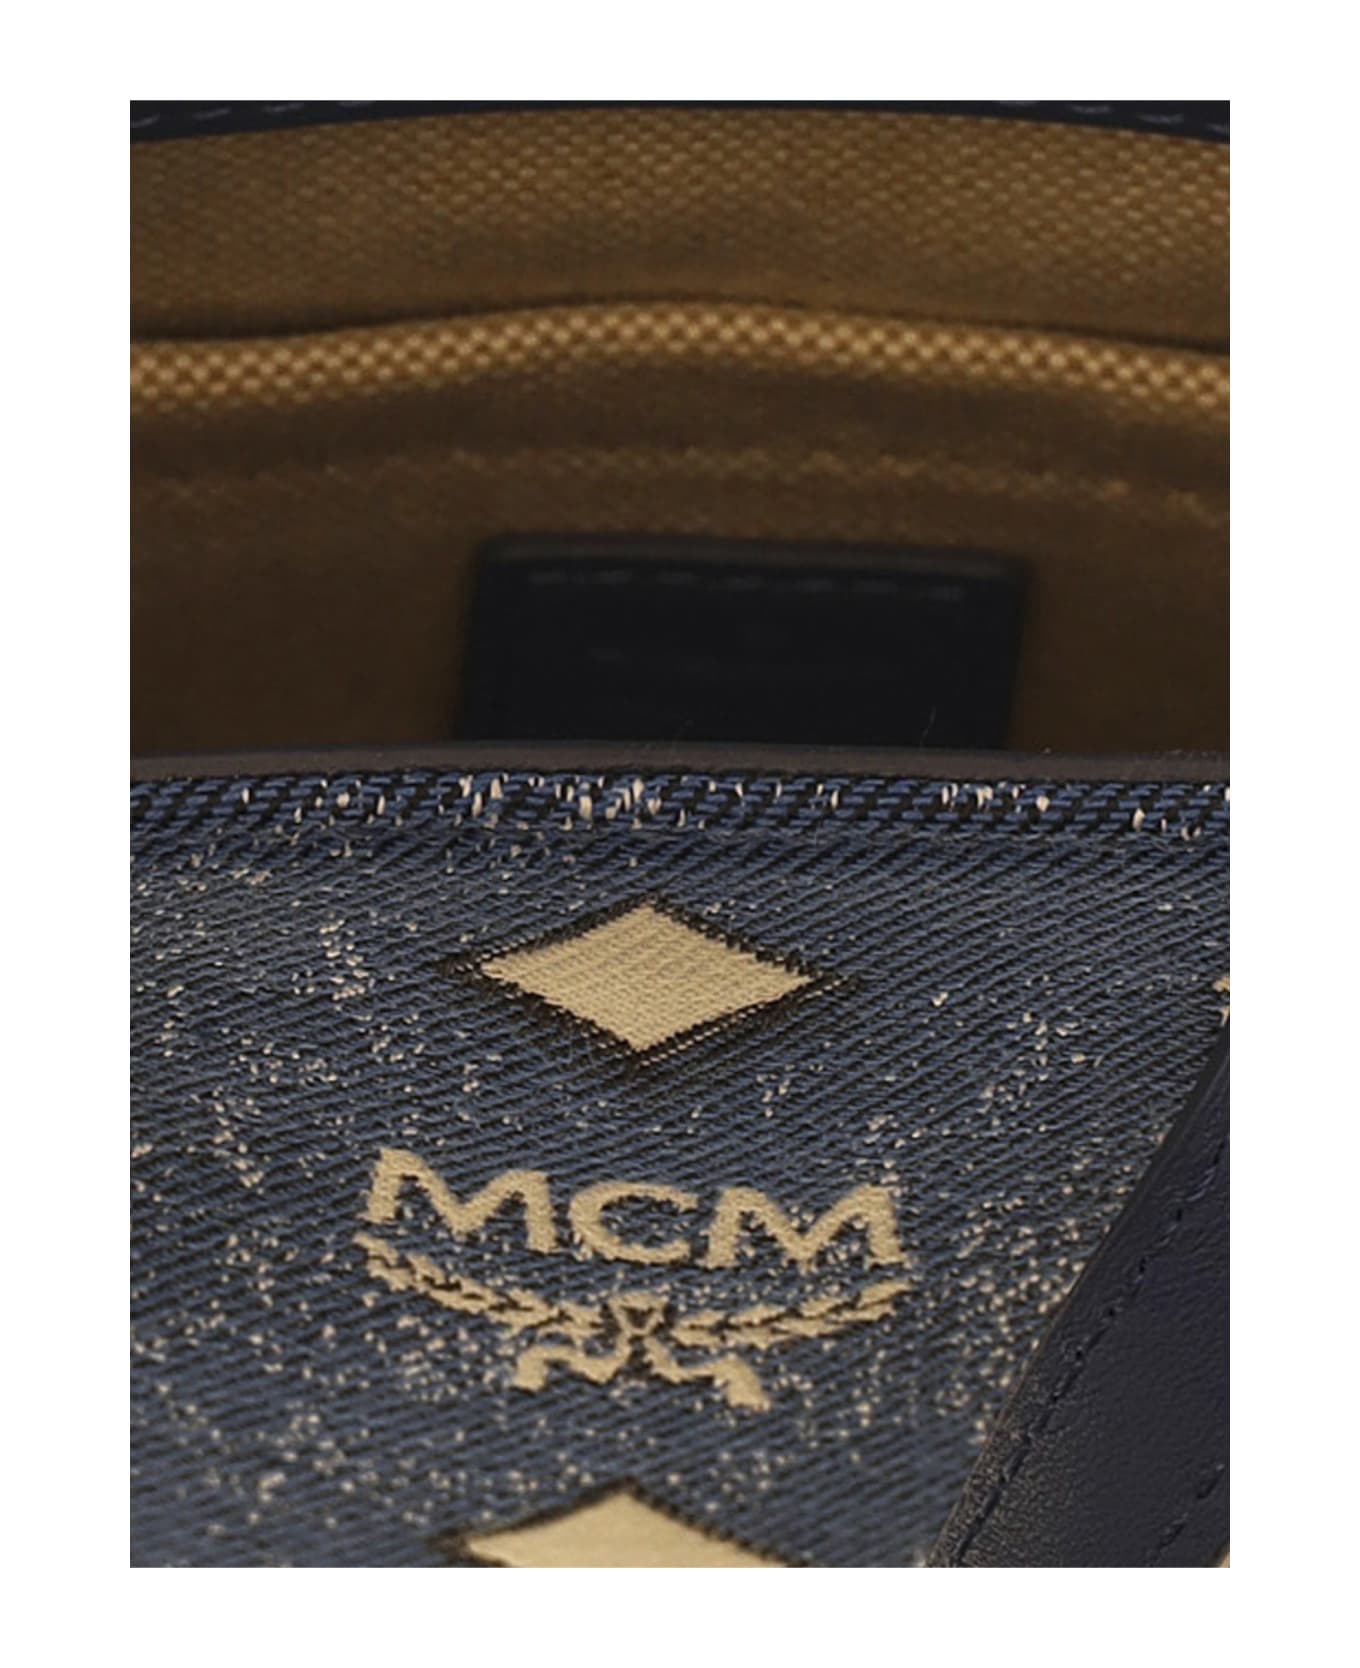 MCM 'aren' Mini Handbag - Blue